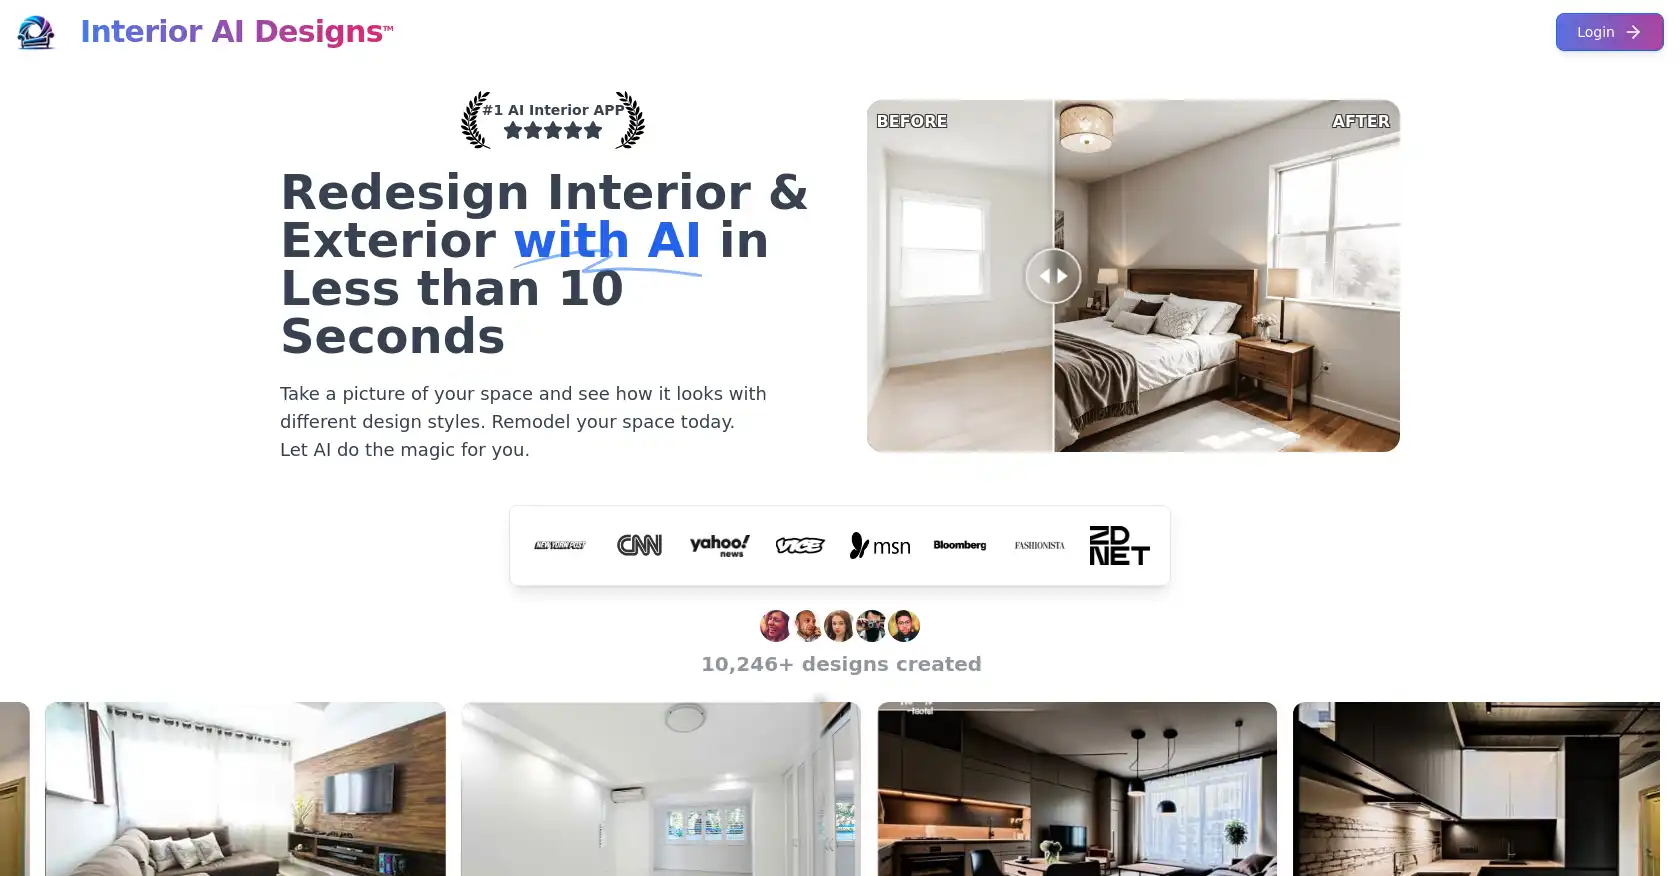 Interior AI Designs